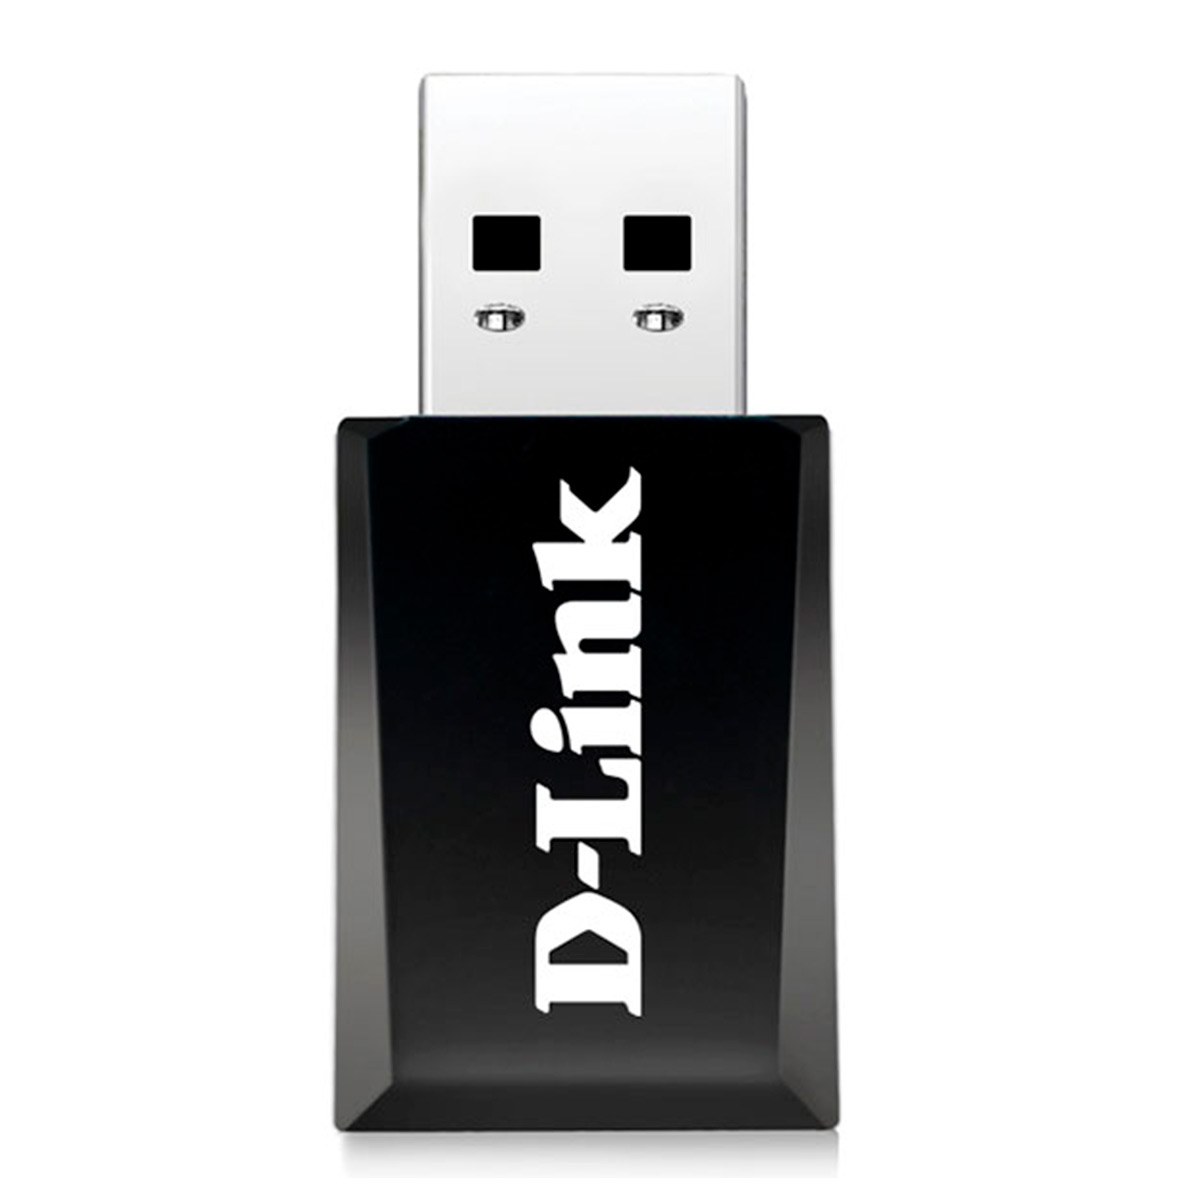 USB Adaptador Wi-Fi D-Link DWA-182 Nano - AC1200 - USB 3.0 - Dual Band 2.4 GHz e 5 GHz - MU-MIMO